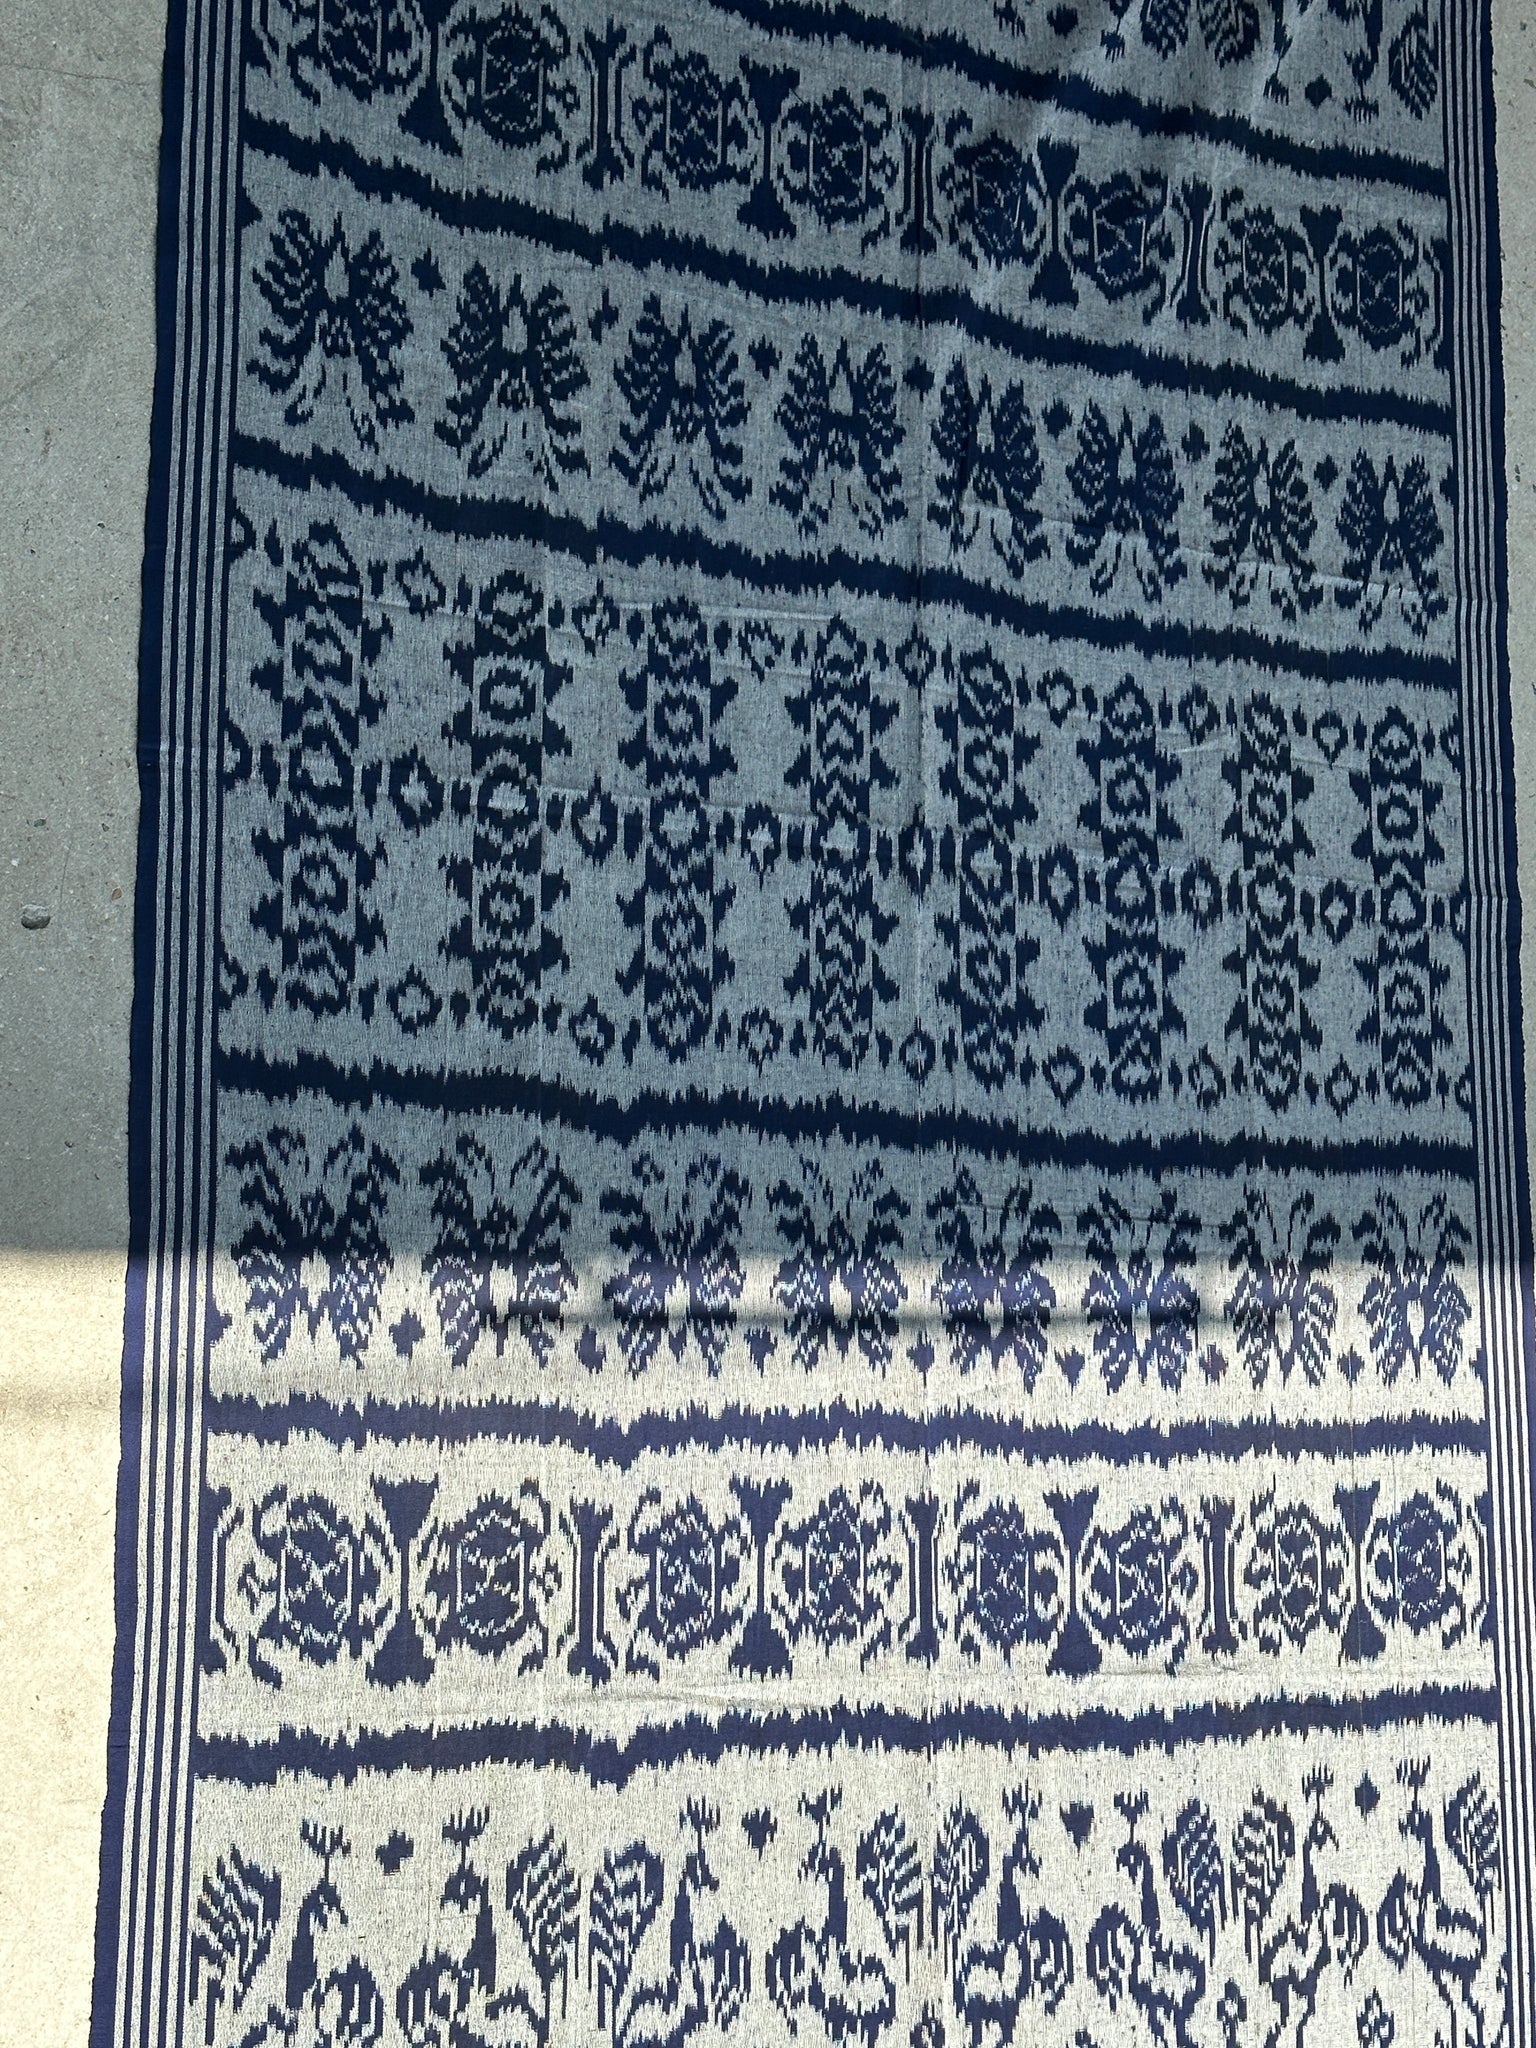 Grand ikat bleu et blanc motif de paon 2m35x1m15